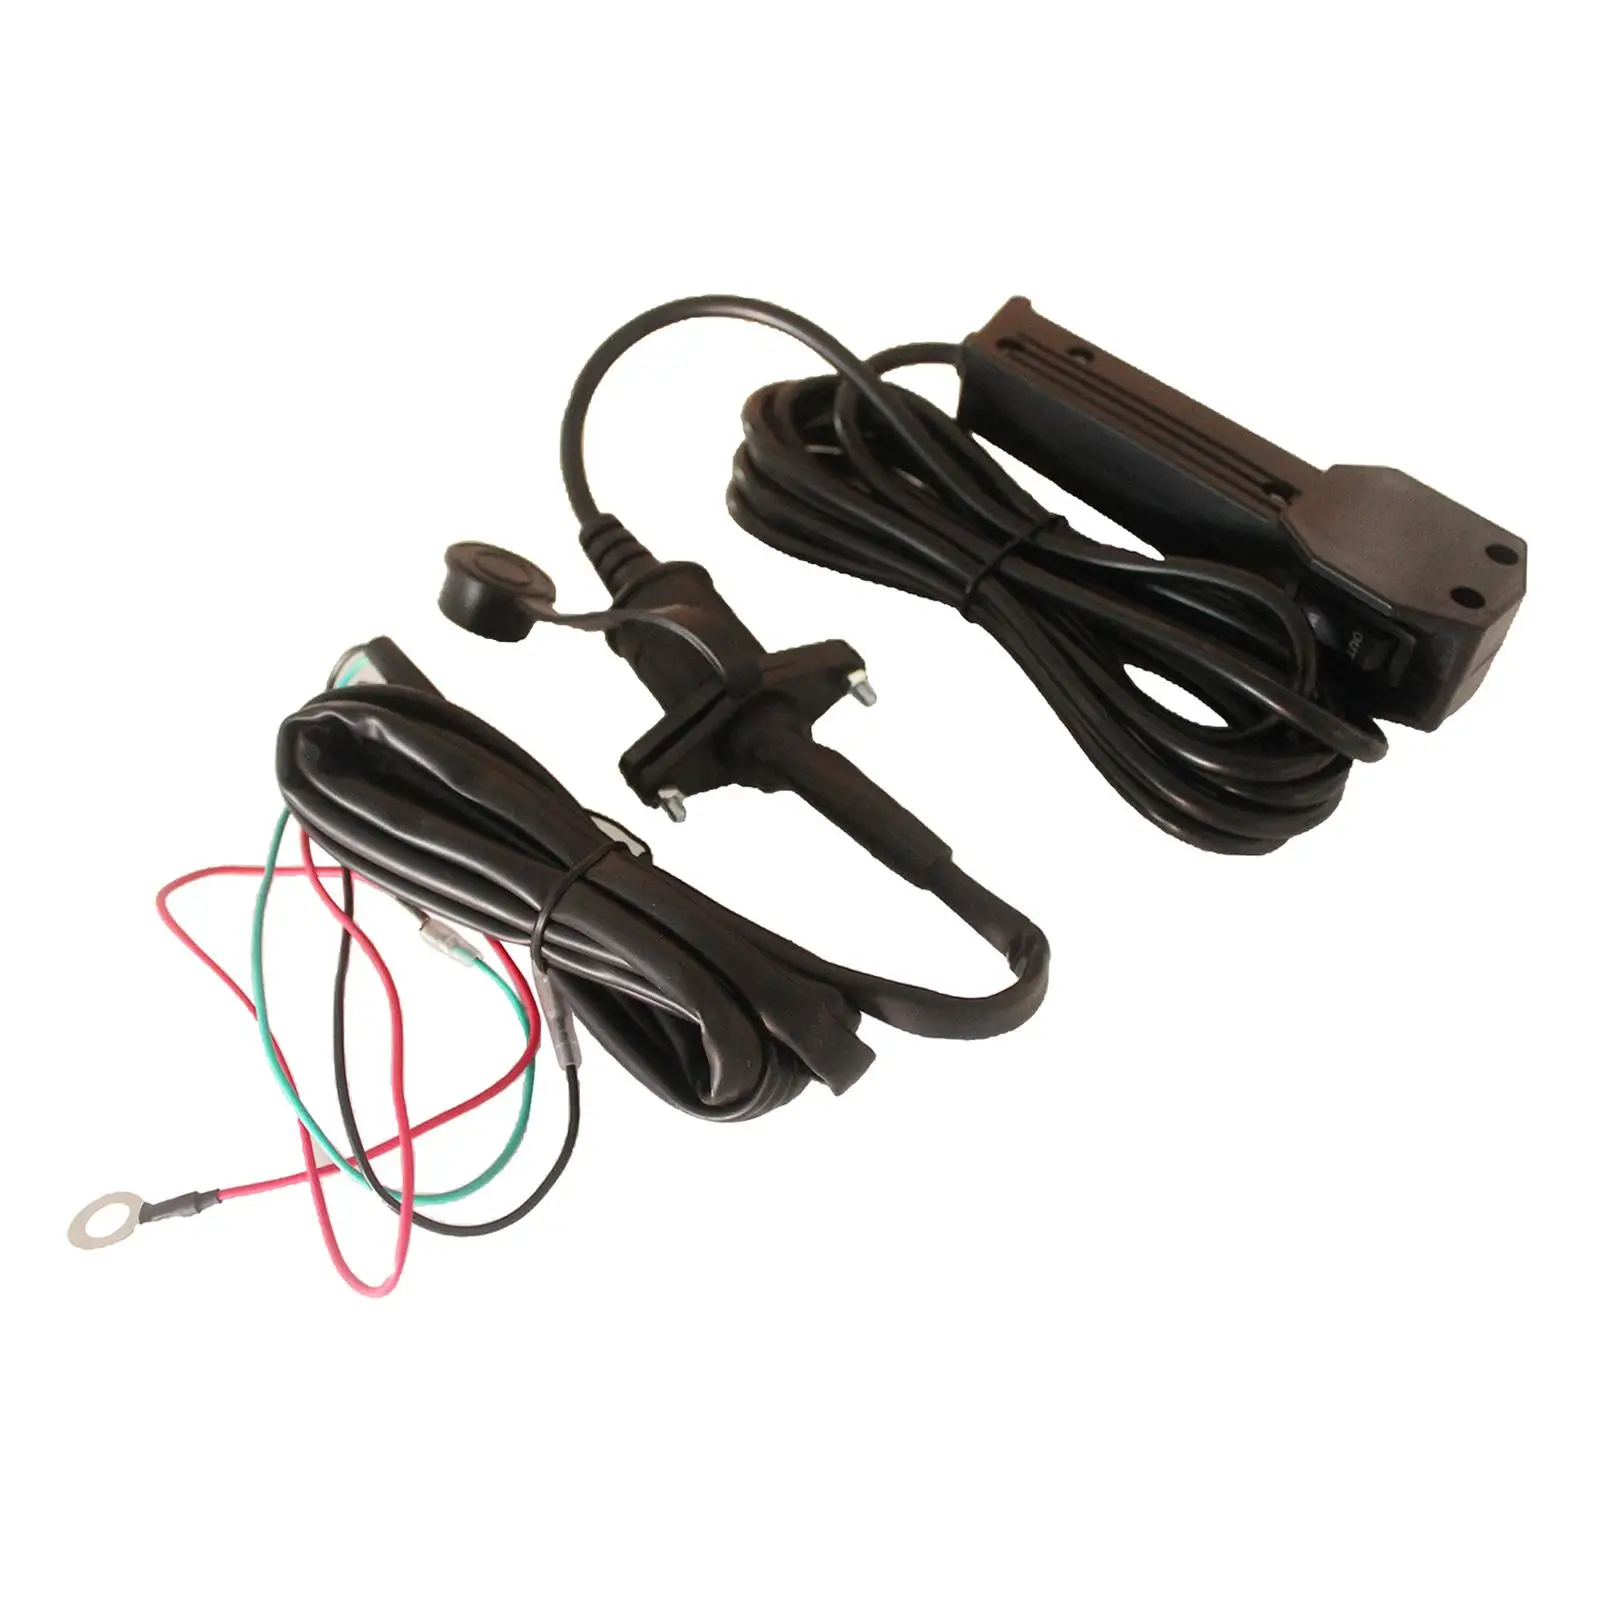 Winch Remote Control Switch Handset for Car ATV SUV UTV W64259